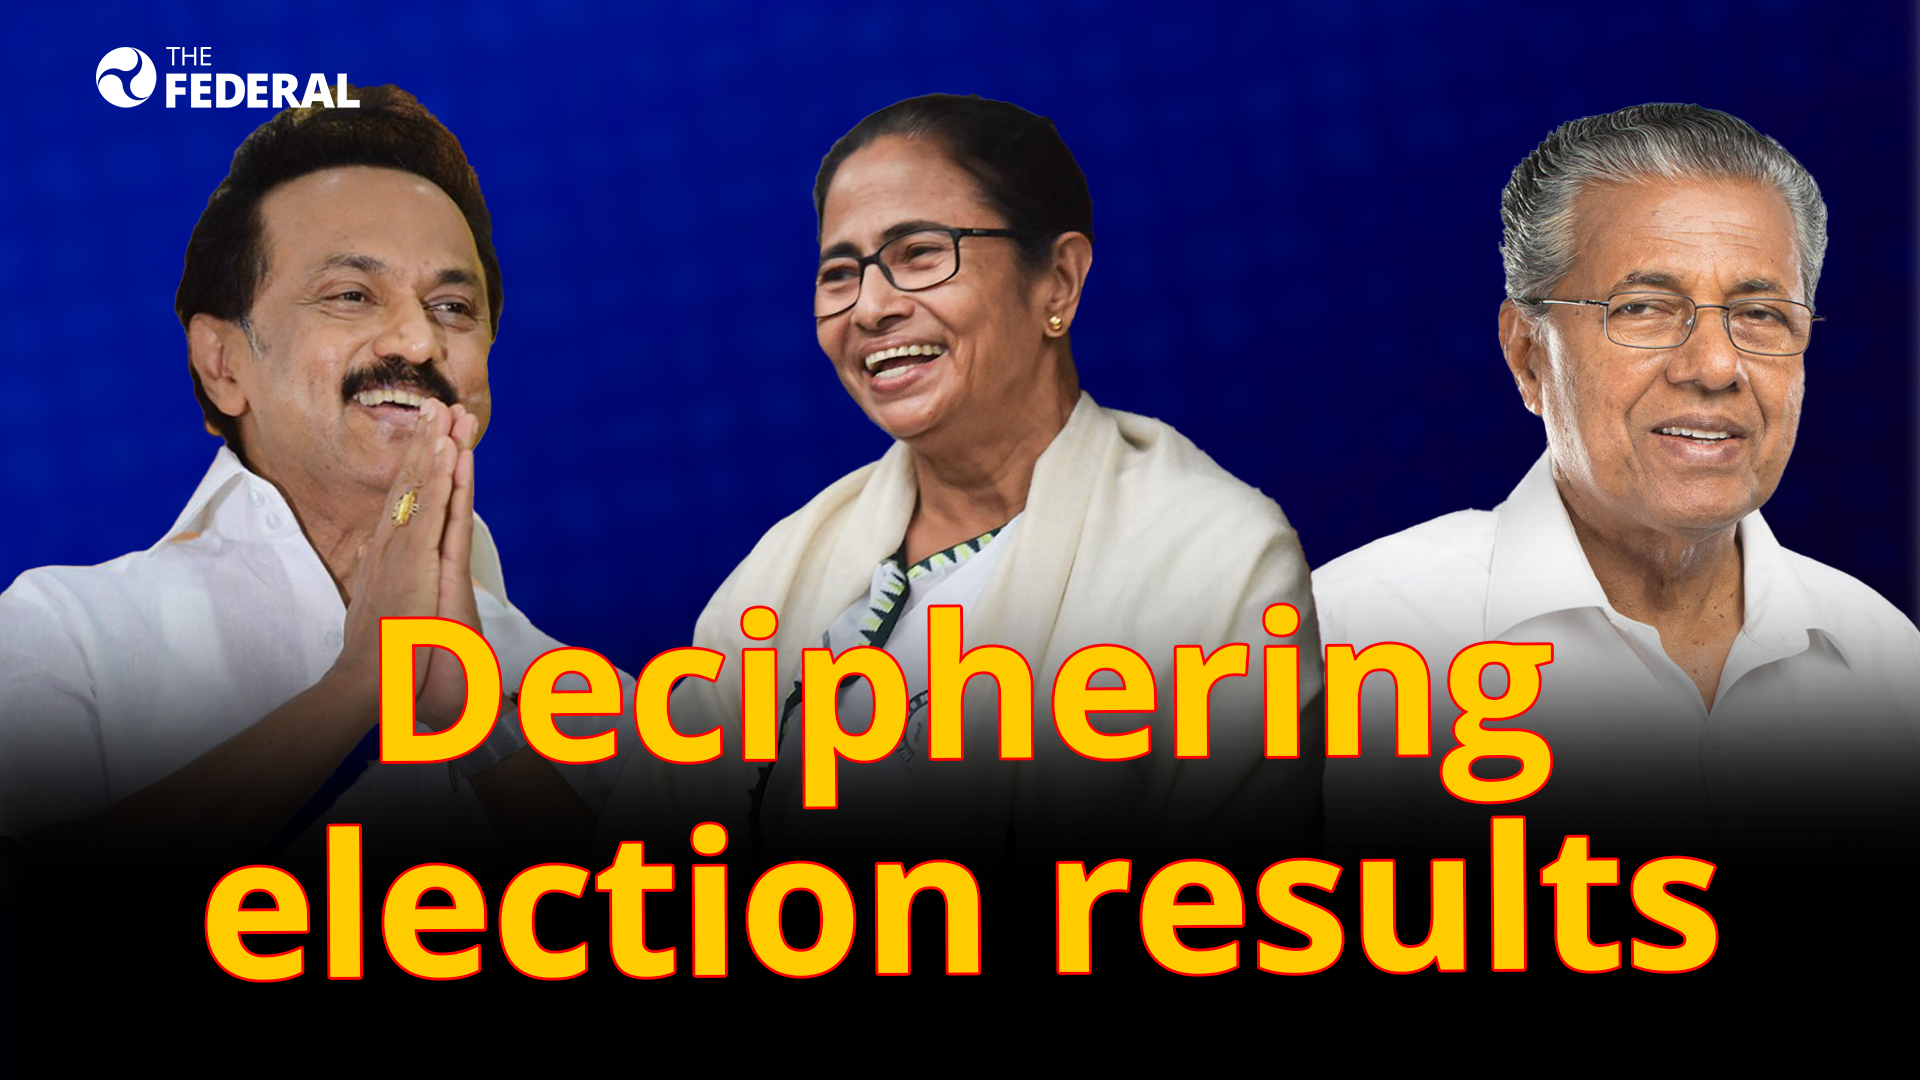 Debate: Deciphering election results